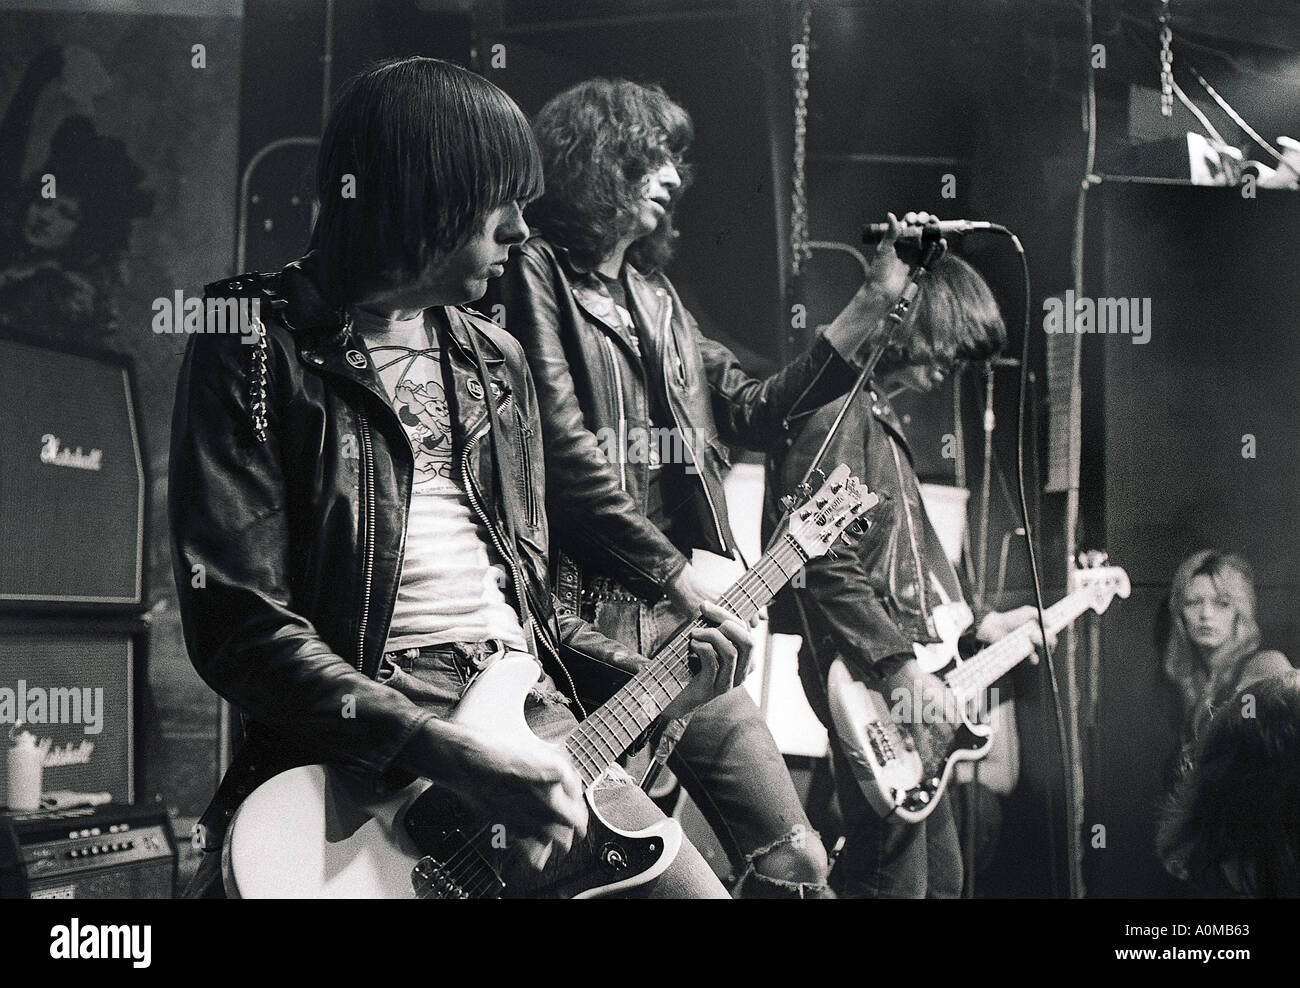 Punk Rock, New York NY, USA 'CBGB's' Nightclub Interior  'The Ramones' Performing on Stage 'Johnny Ramone', punk rock'n'roll Guitar, vintage 1970s Stock Photo